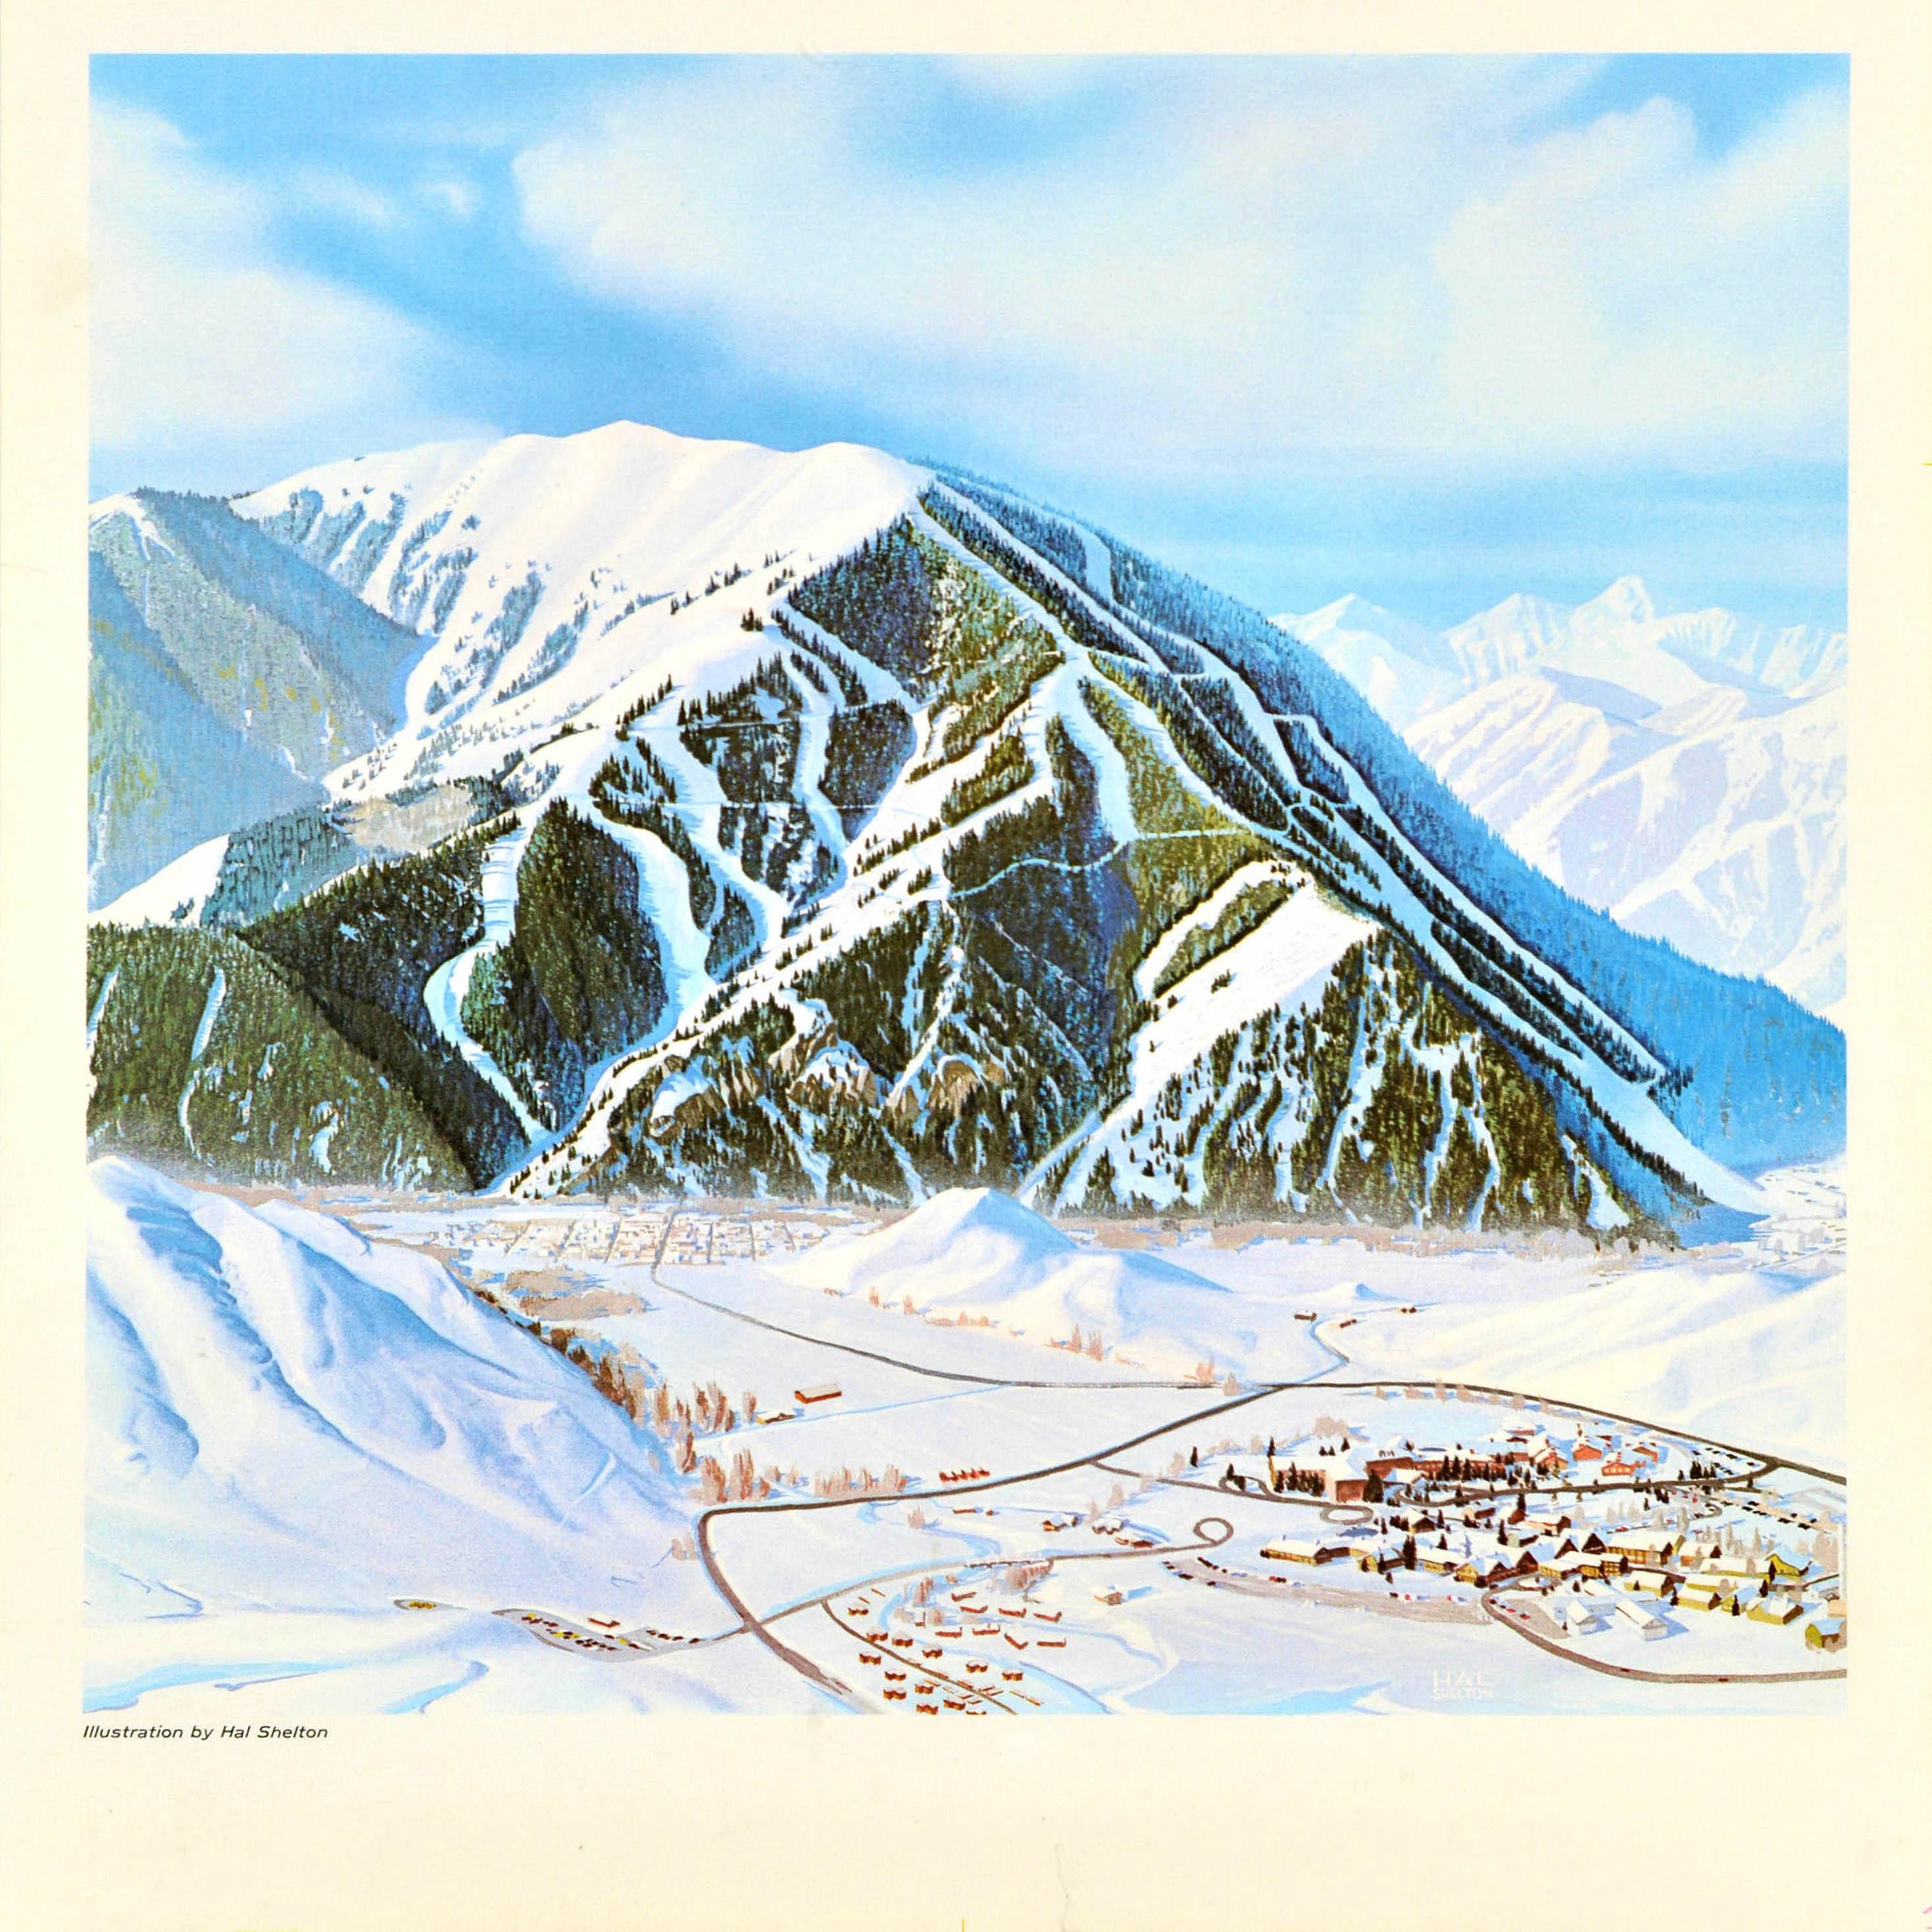 sun valley ski map